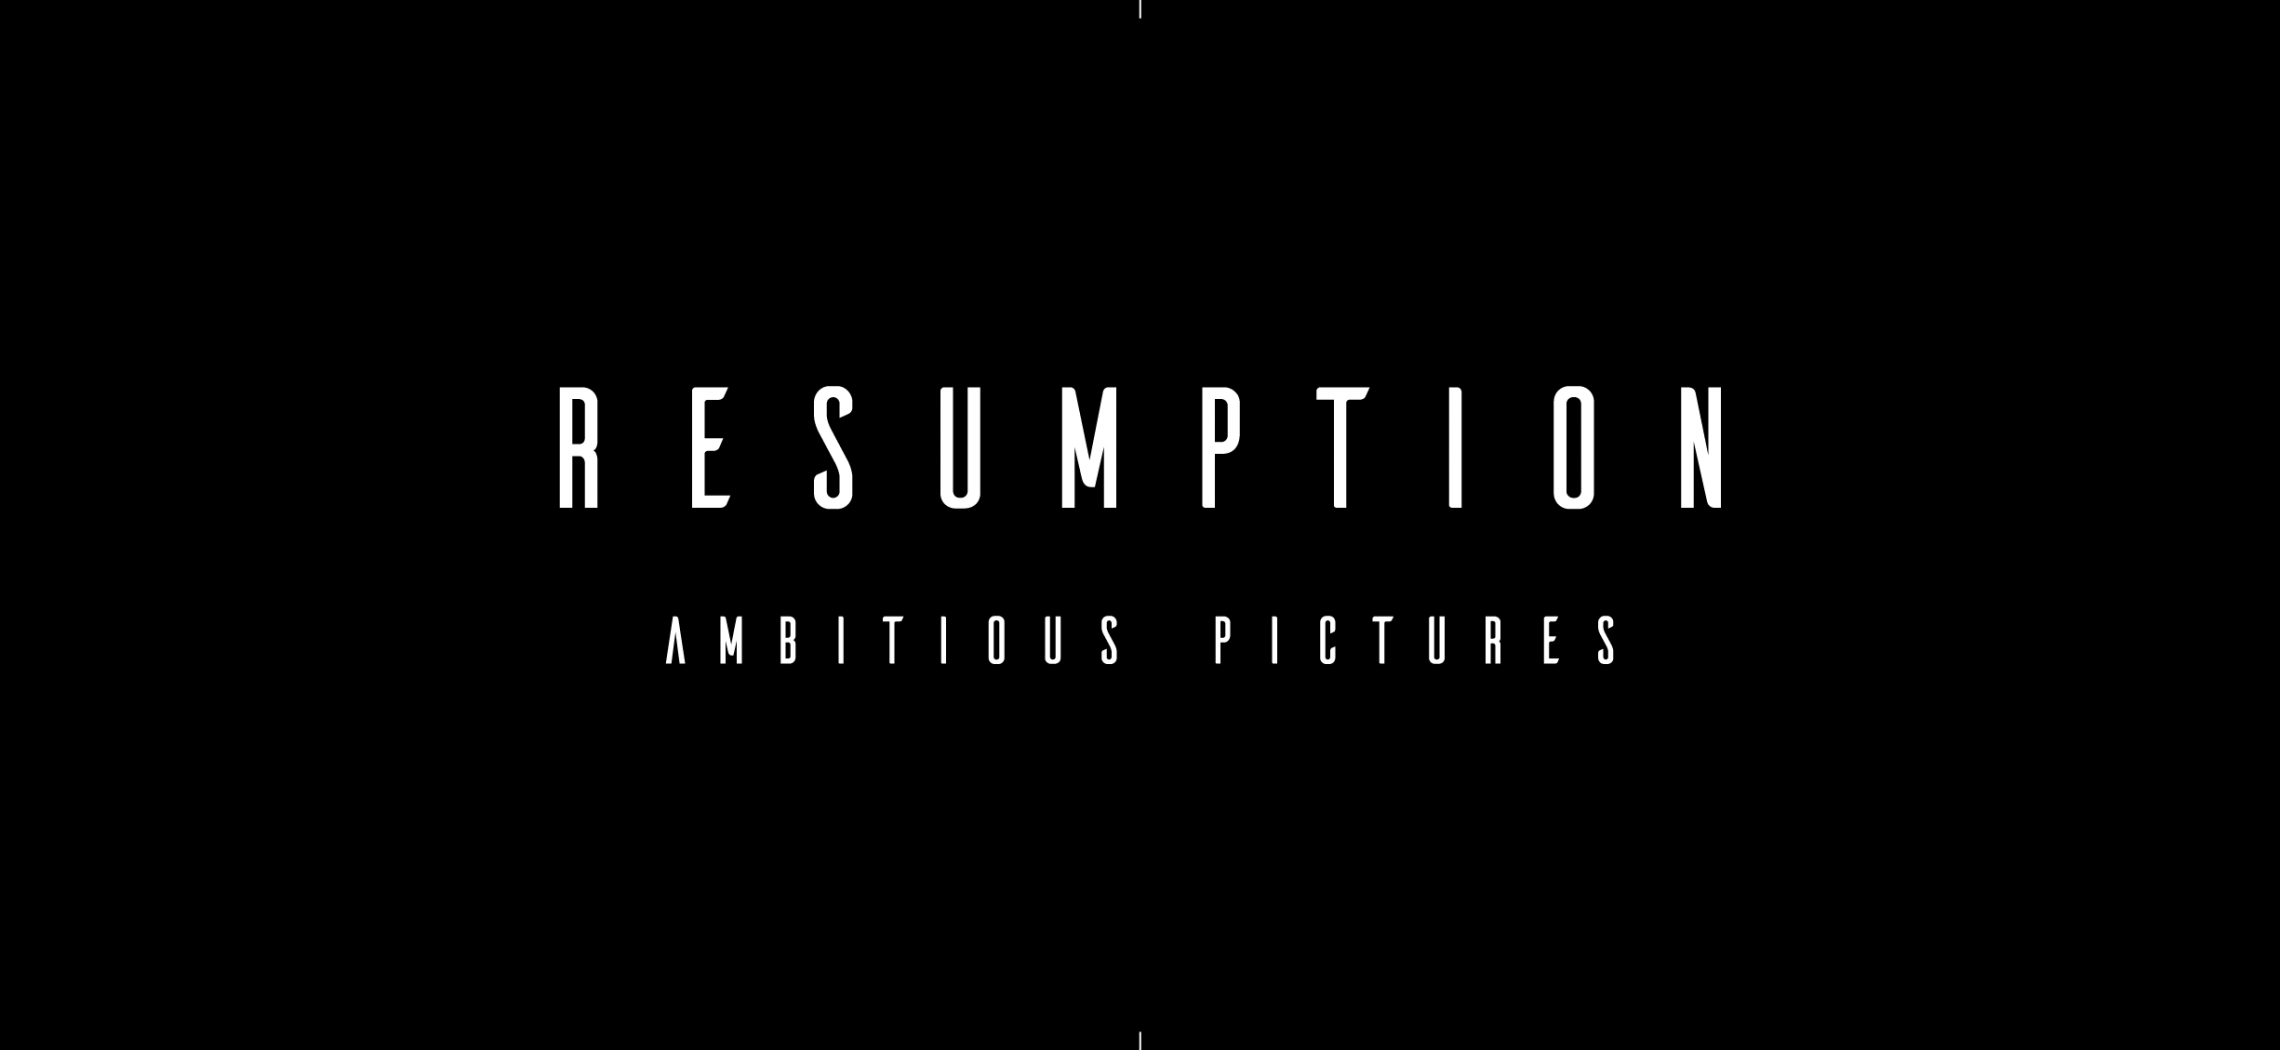 RESUMPTION_LOGO_Ambitious_Pictures_